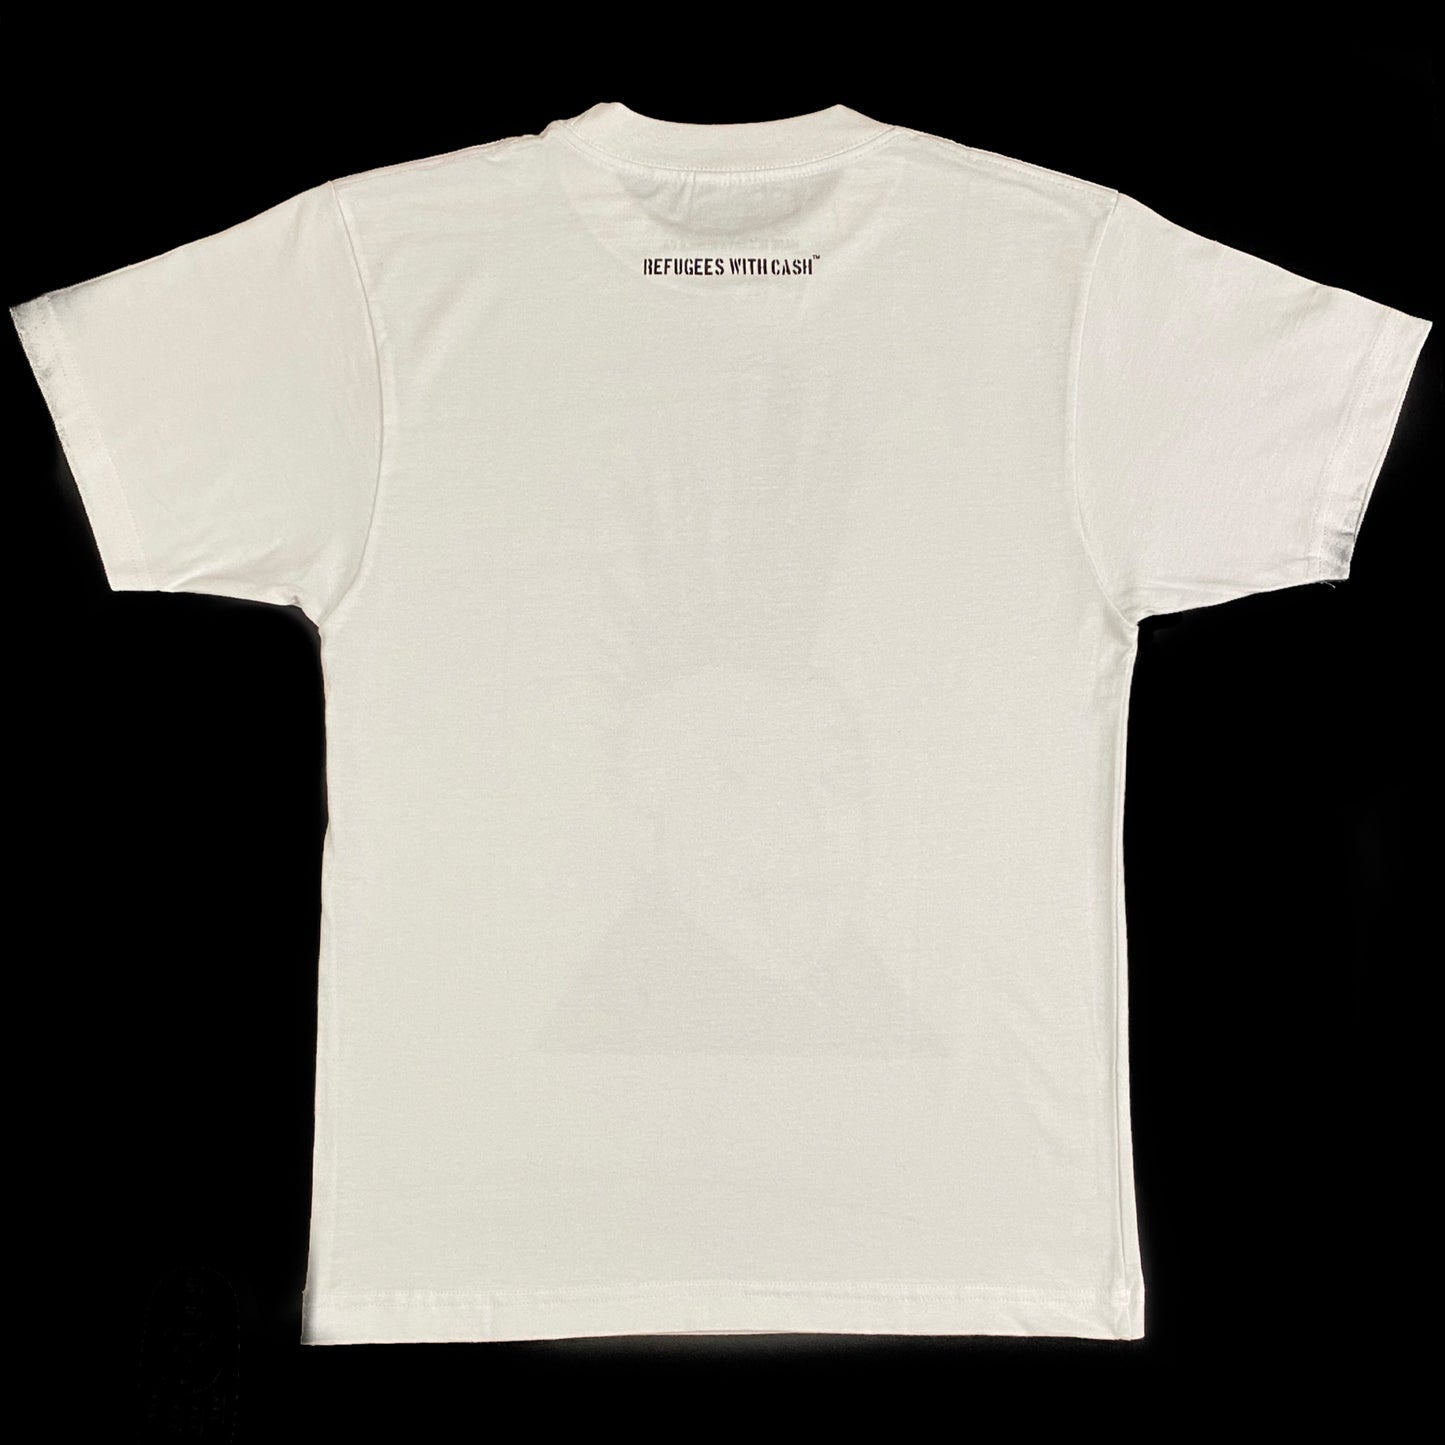 RWC White Unisex T-Shirt - Surrealist